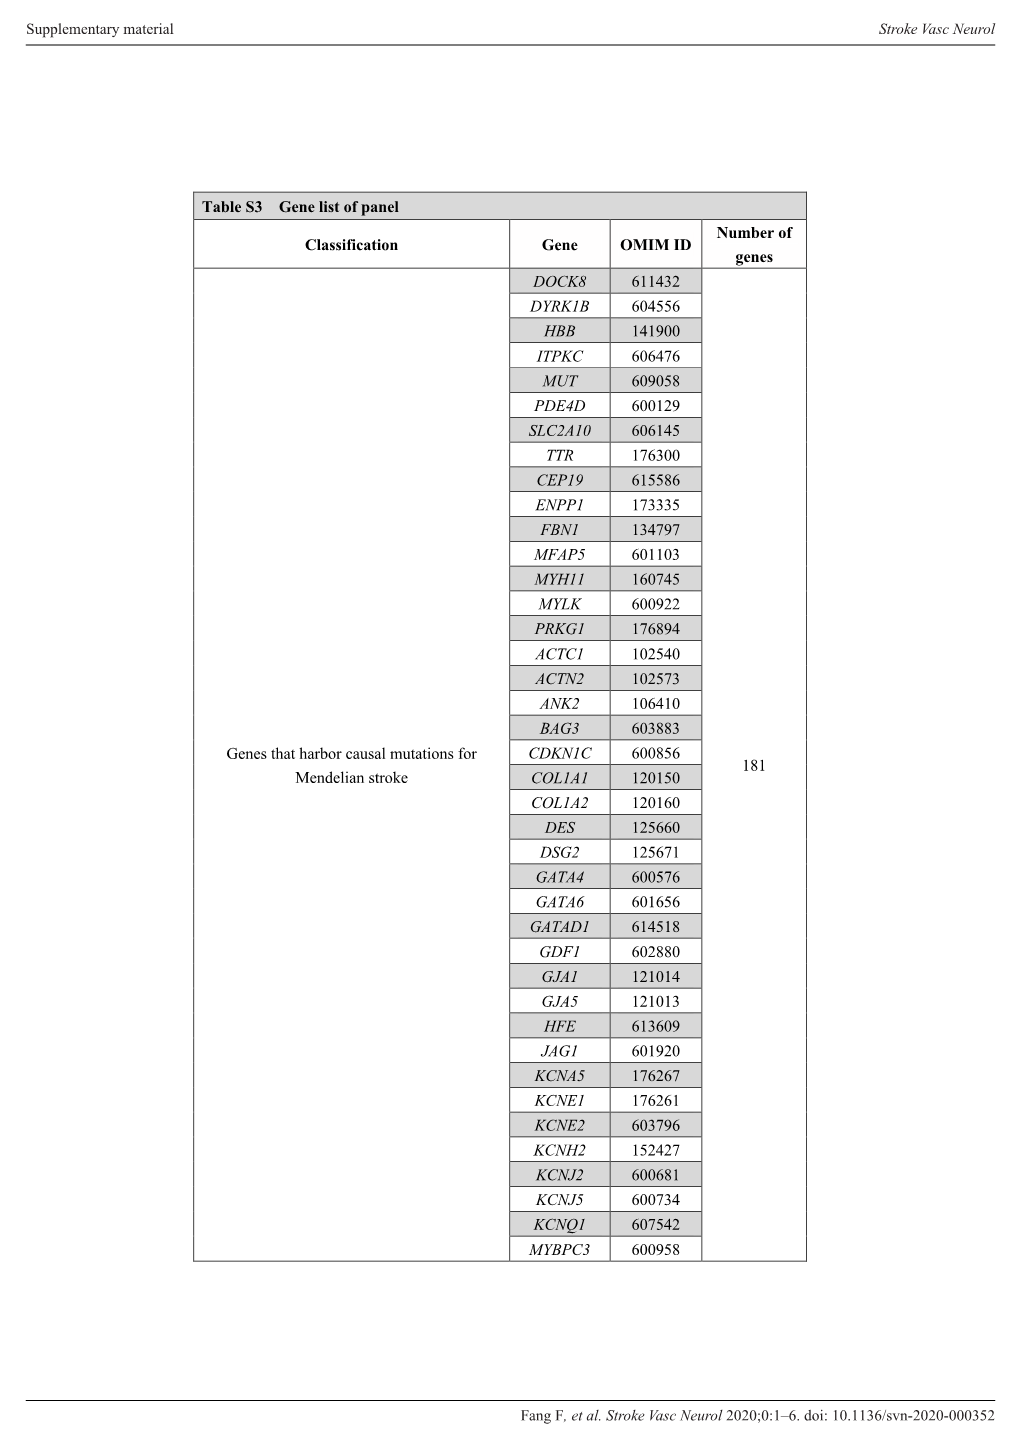 Table S3 Gene List of Panel Classification Gene OMIM ID